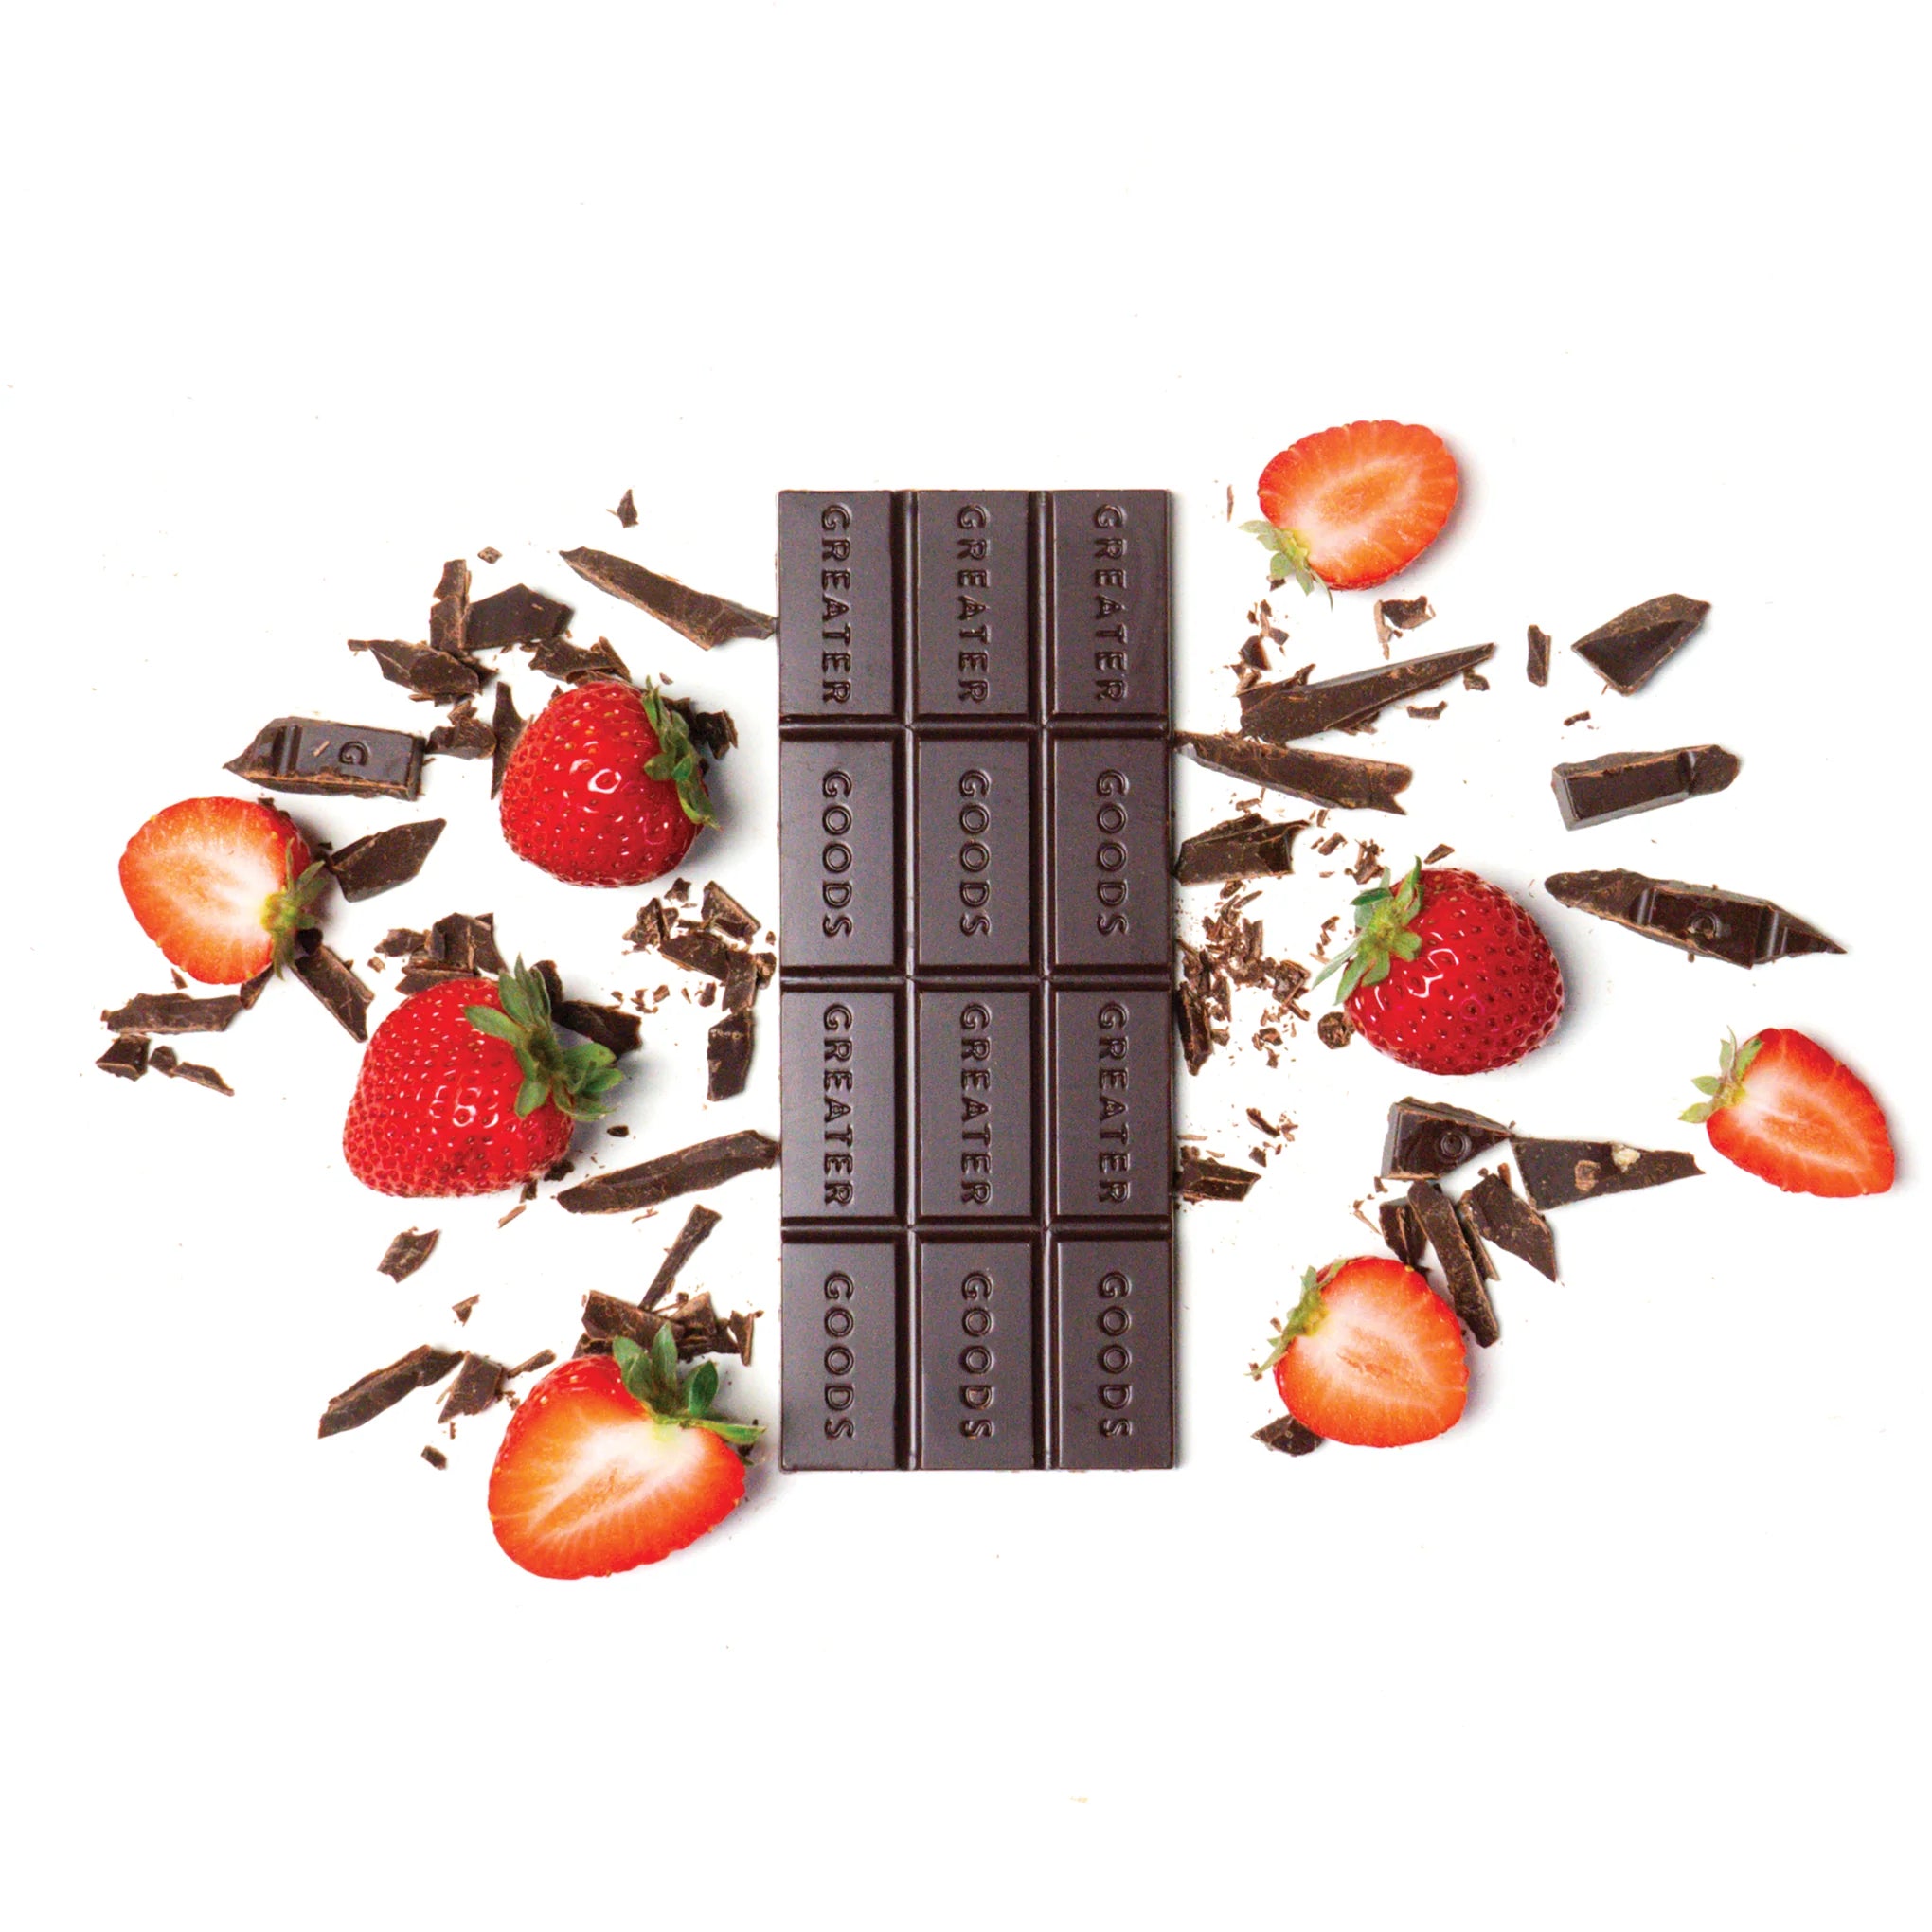 Greater Goods, CBD 70% Organic Dark Chocolate Bar, Strawberry Flavor, 1.8oz, 100mg CBD